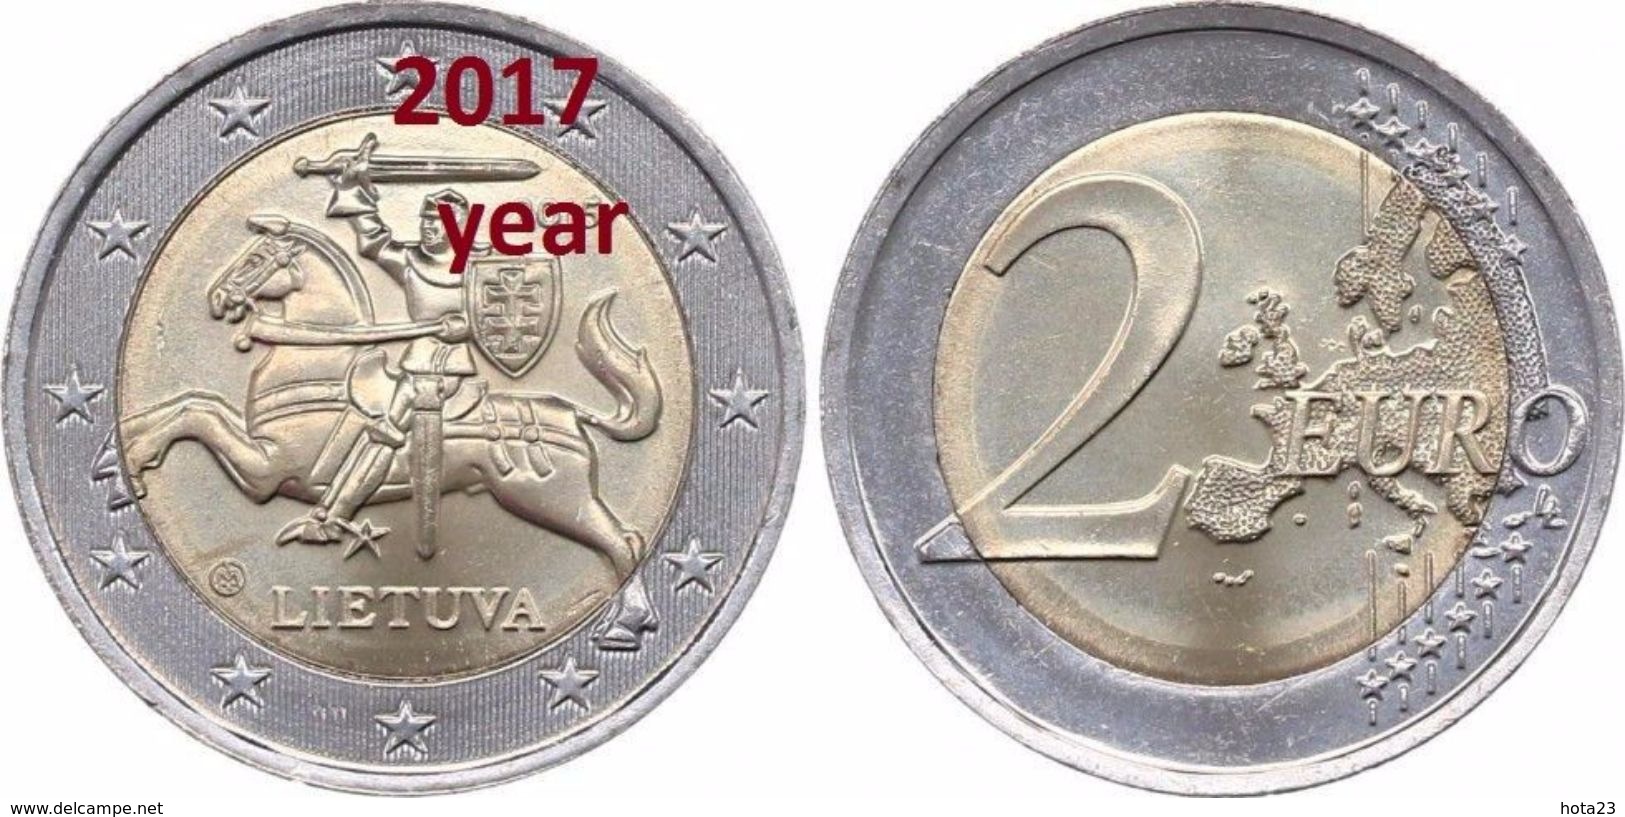 Lithuania Litauen 2017 2 Euro Kursmünze UNC RRR RARE Coin - Rare Keydate FROM MINT ROLL UNC - Lithuania